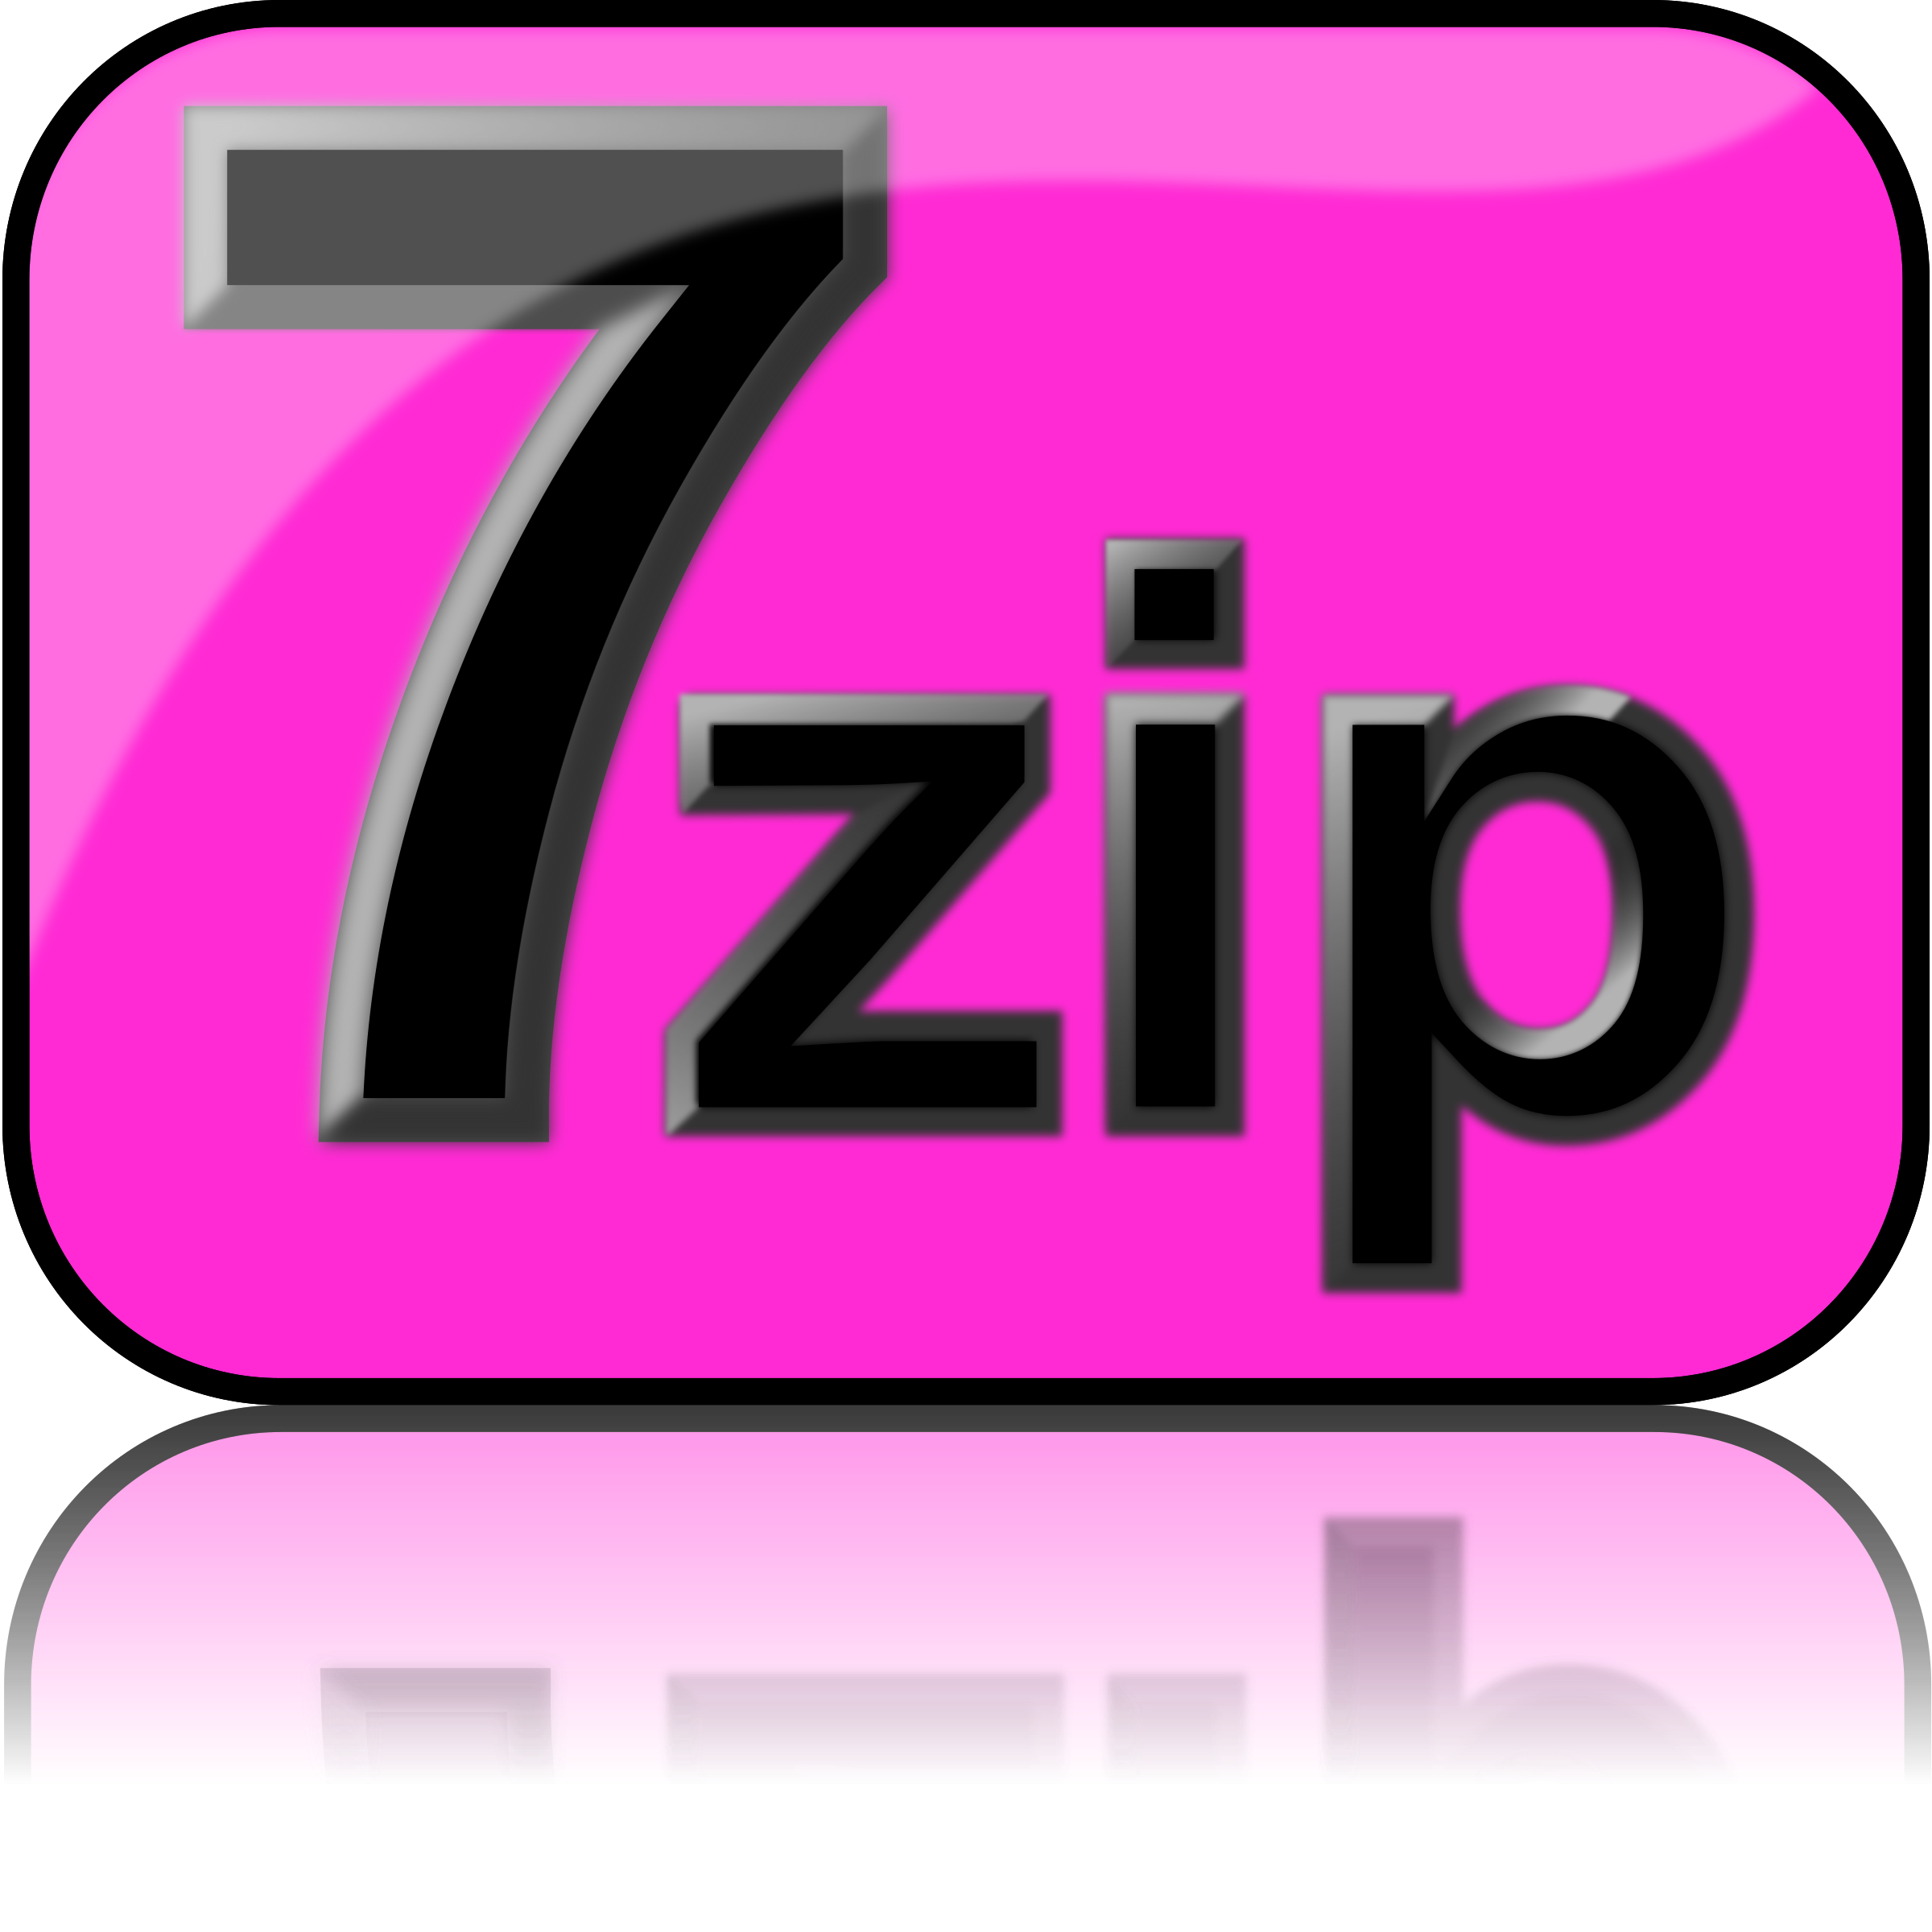 7zip Glossy Extrude Magenta Clip arts